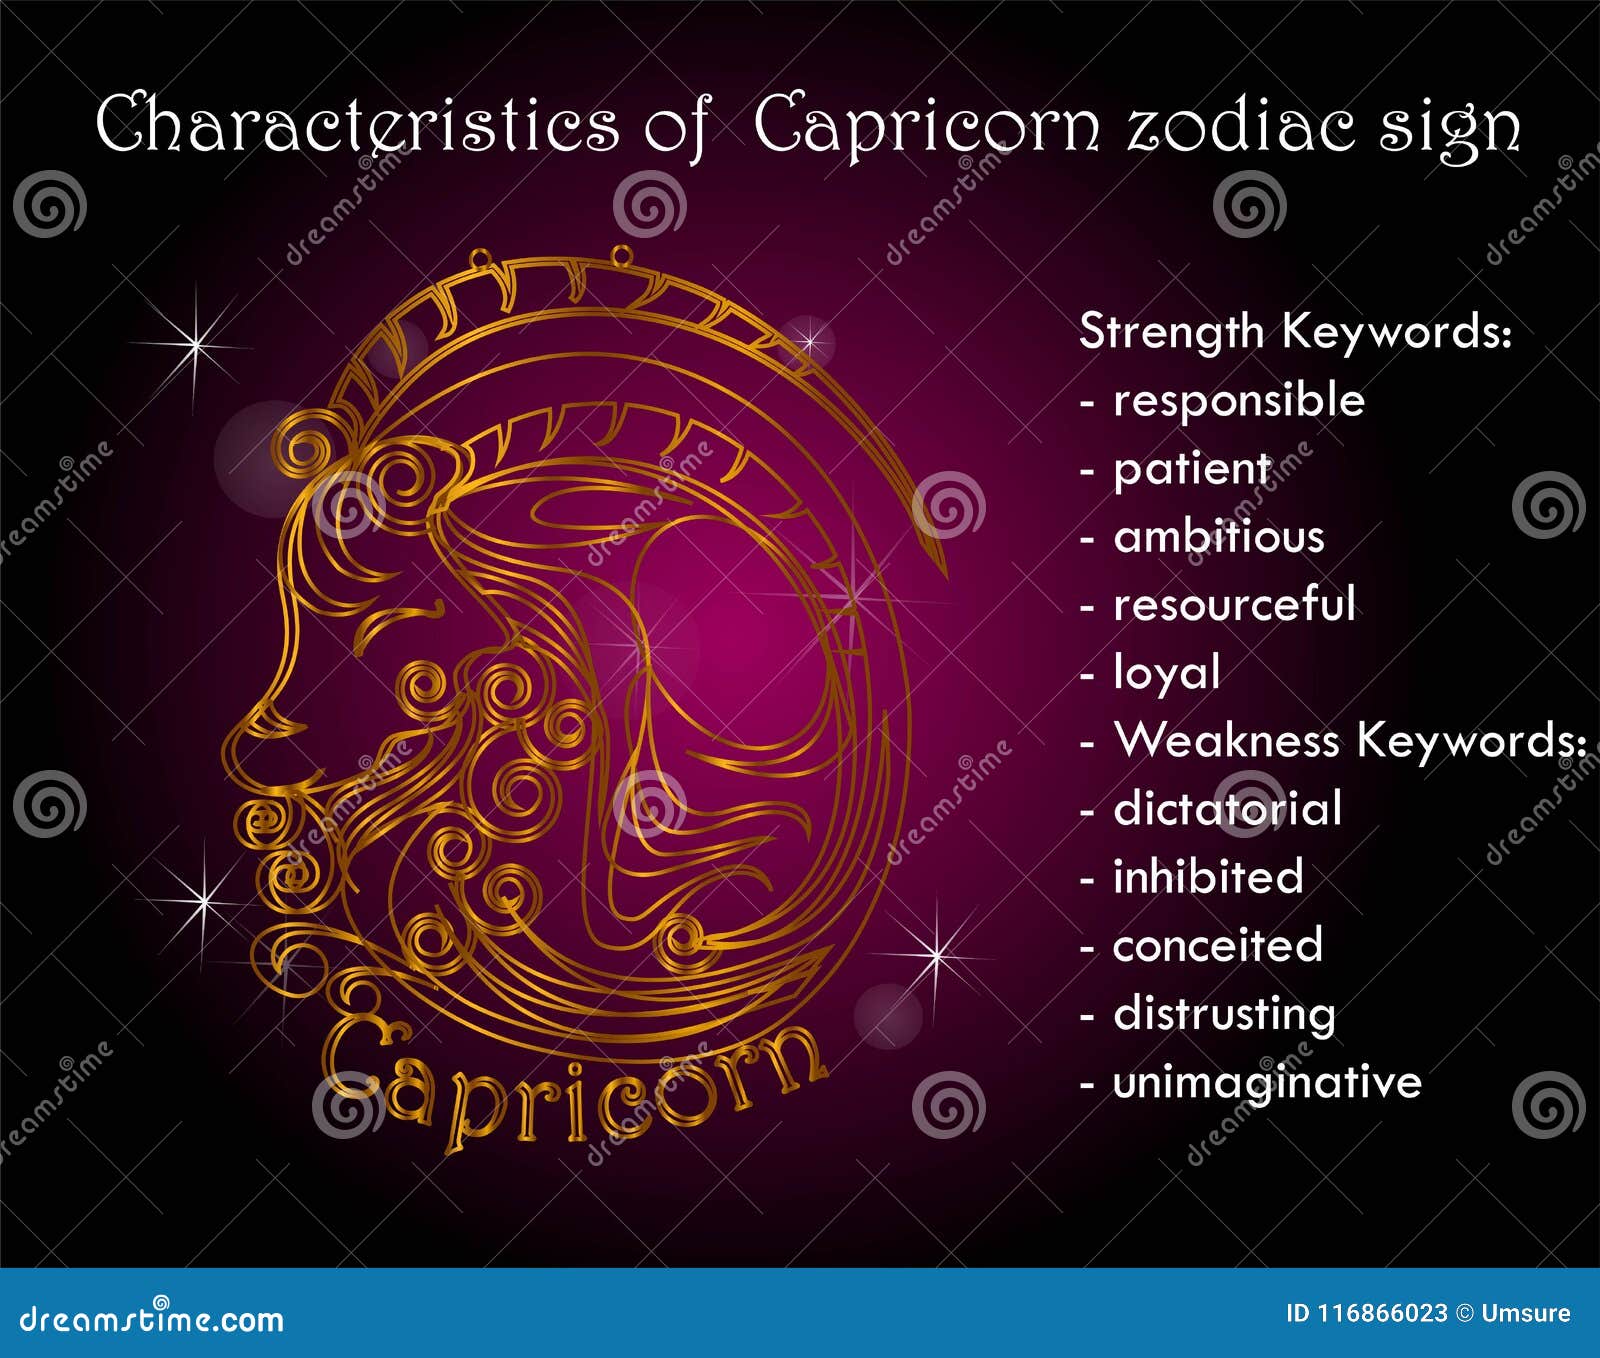 Capricorn personality